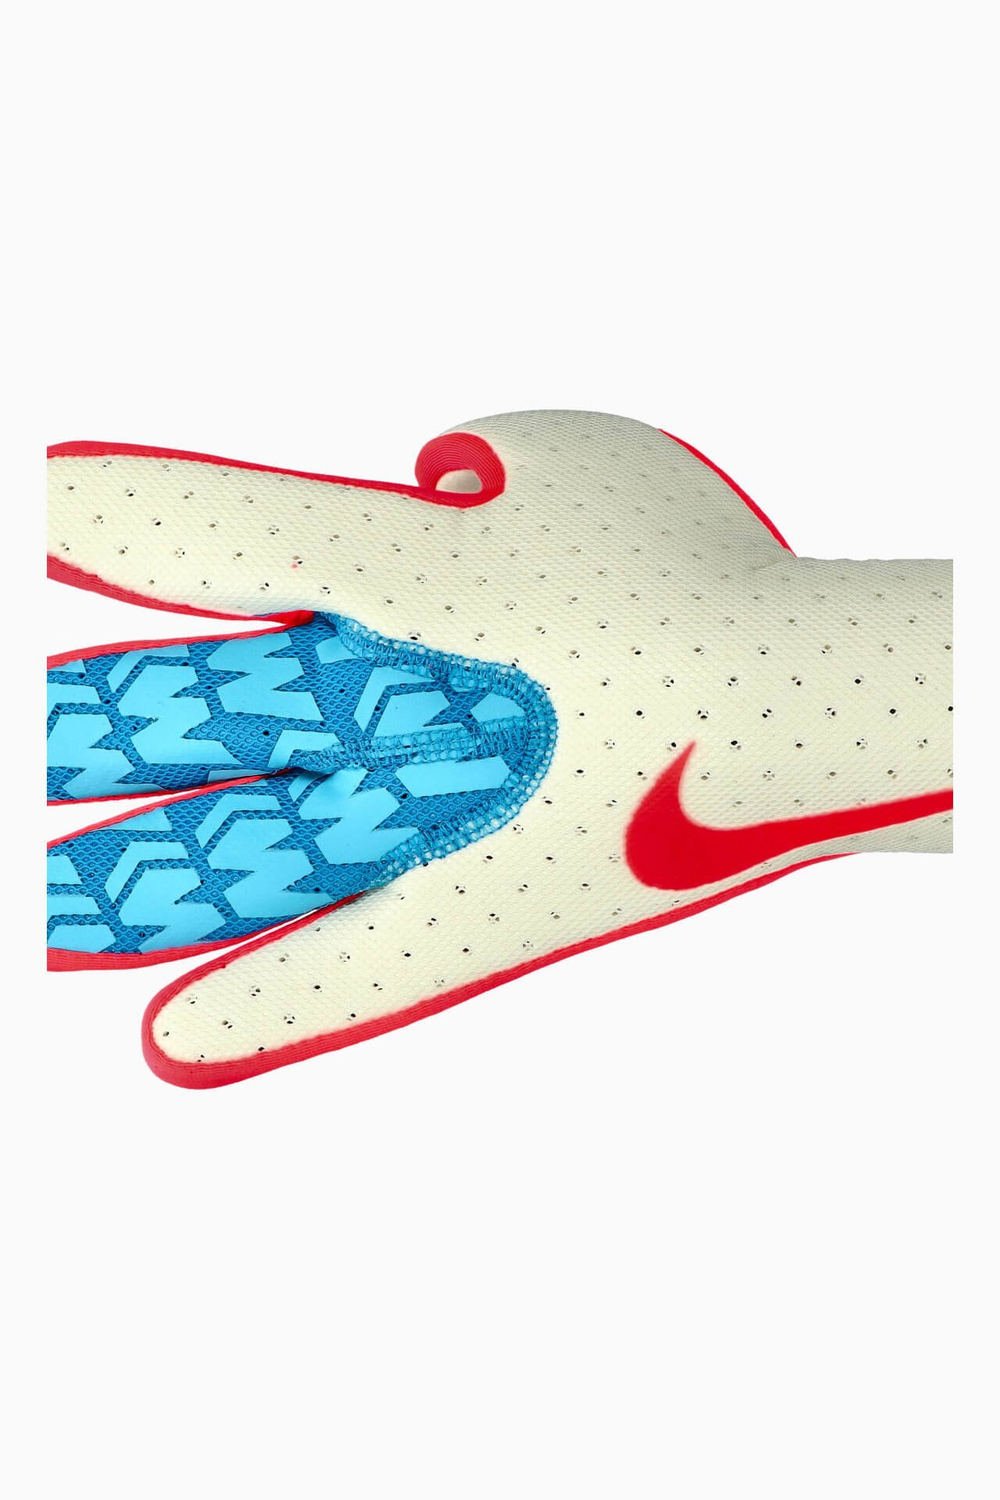 Вратарские перчатки Nike Mercurial Touch Elite